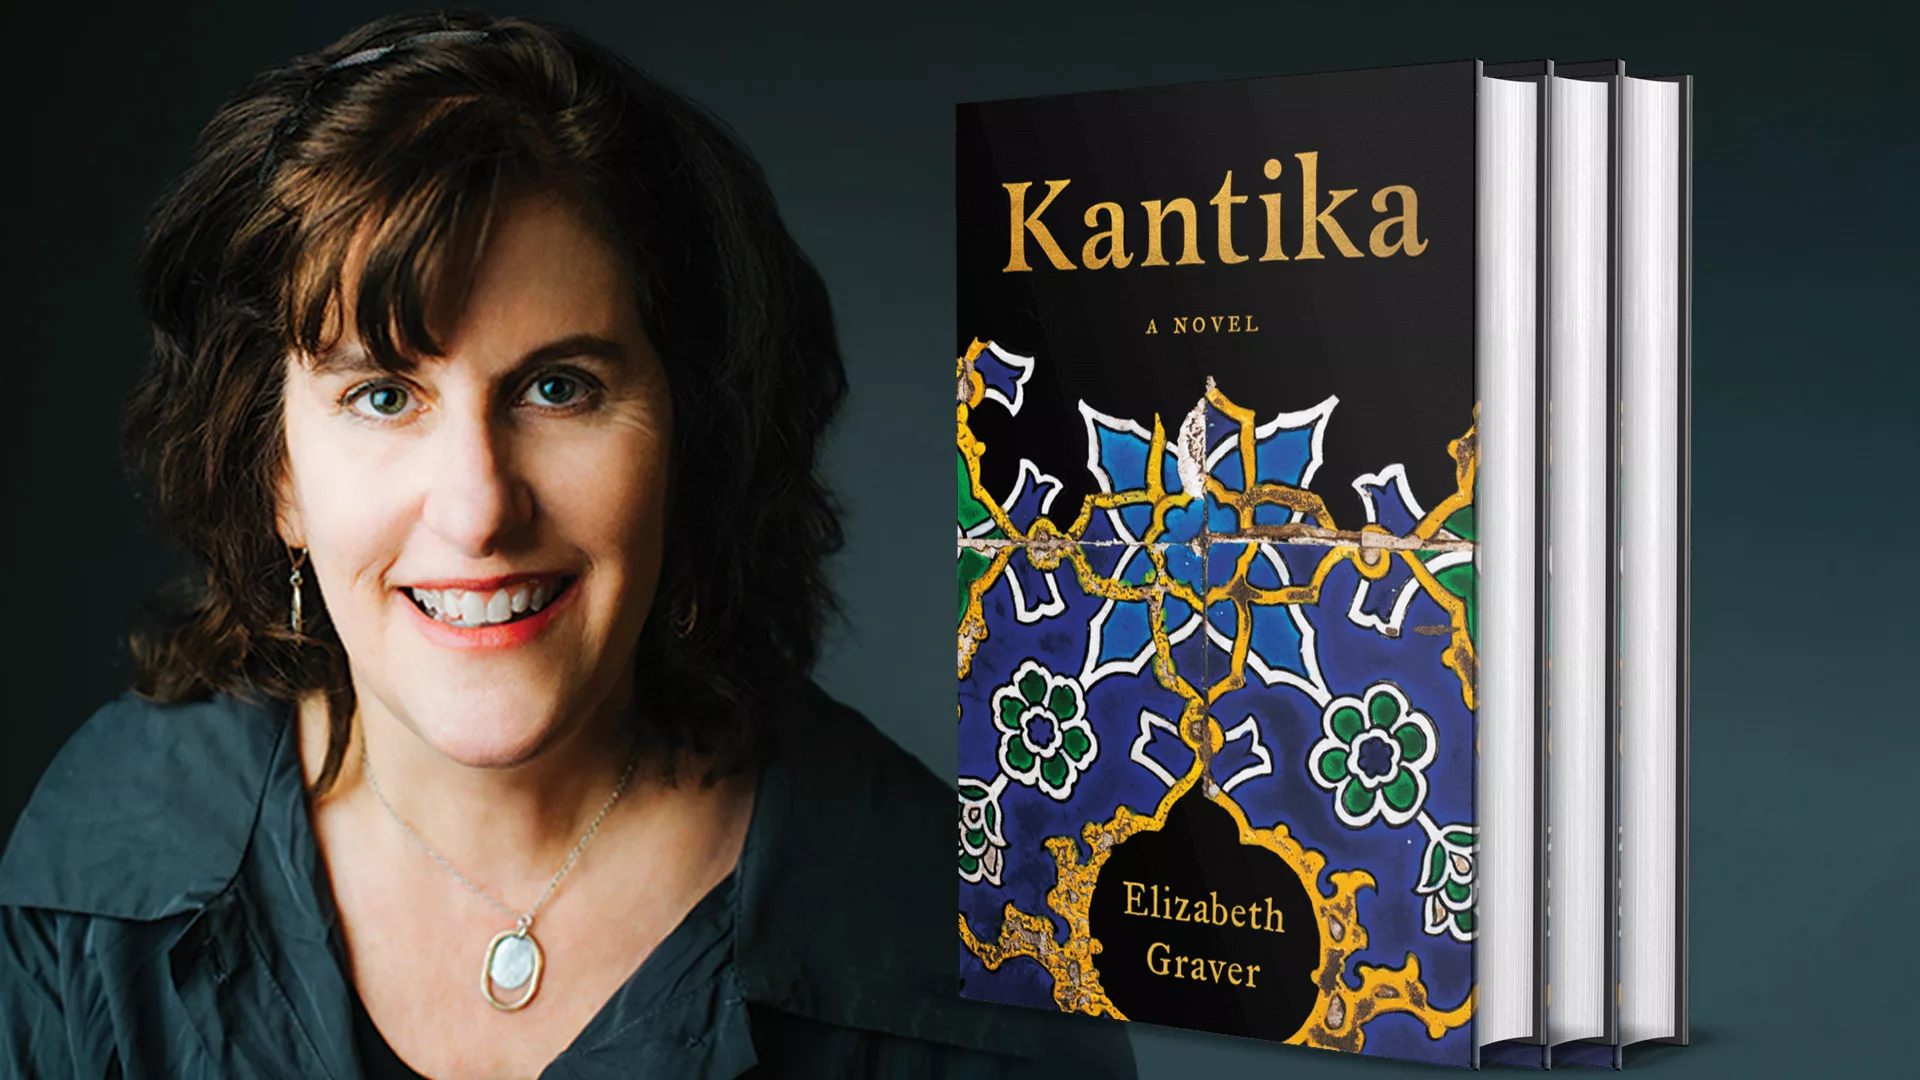 Kantinka book, author Elizabeth Graver smiling.